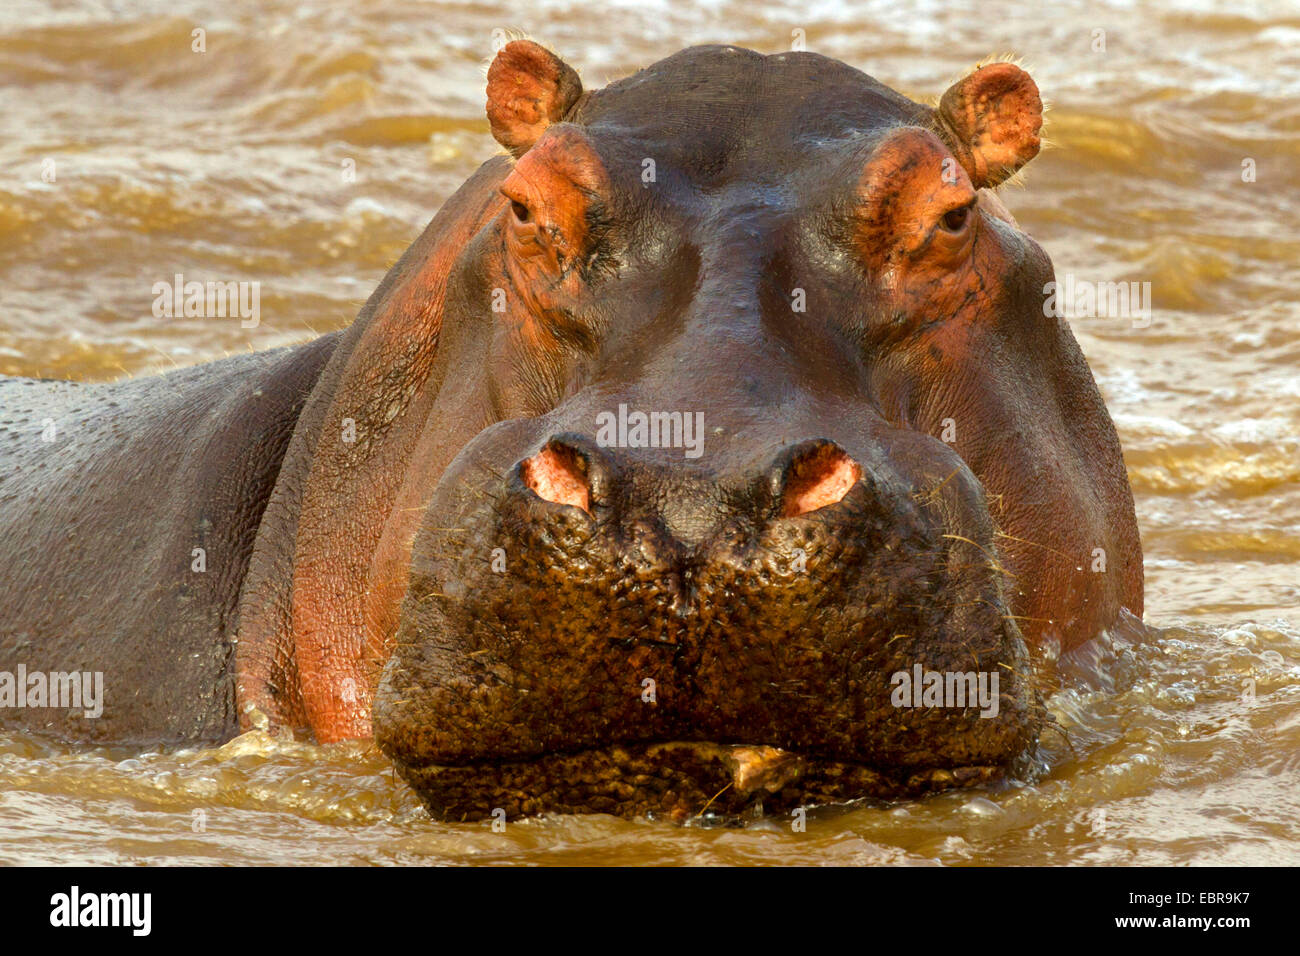 Nilpferd, Nilpferd, gemeinsame Flusspferd (Hippopotamus Amphibius), Portrait in Wasser, Kenia, Masai Mara Nationalpark Stockfoto